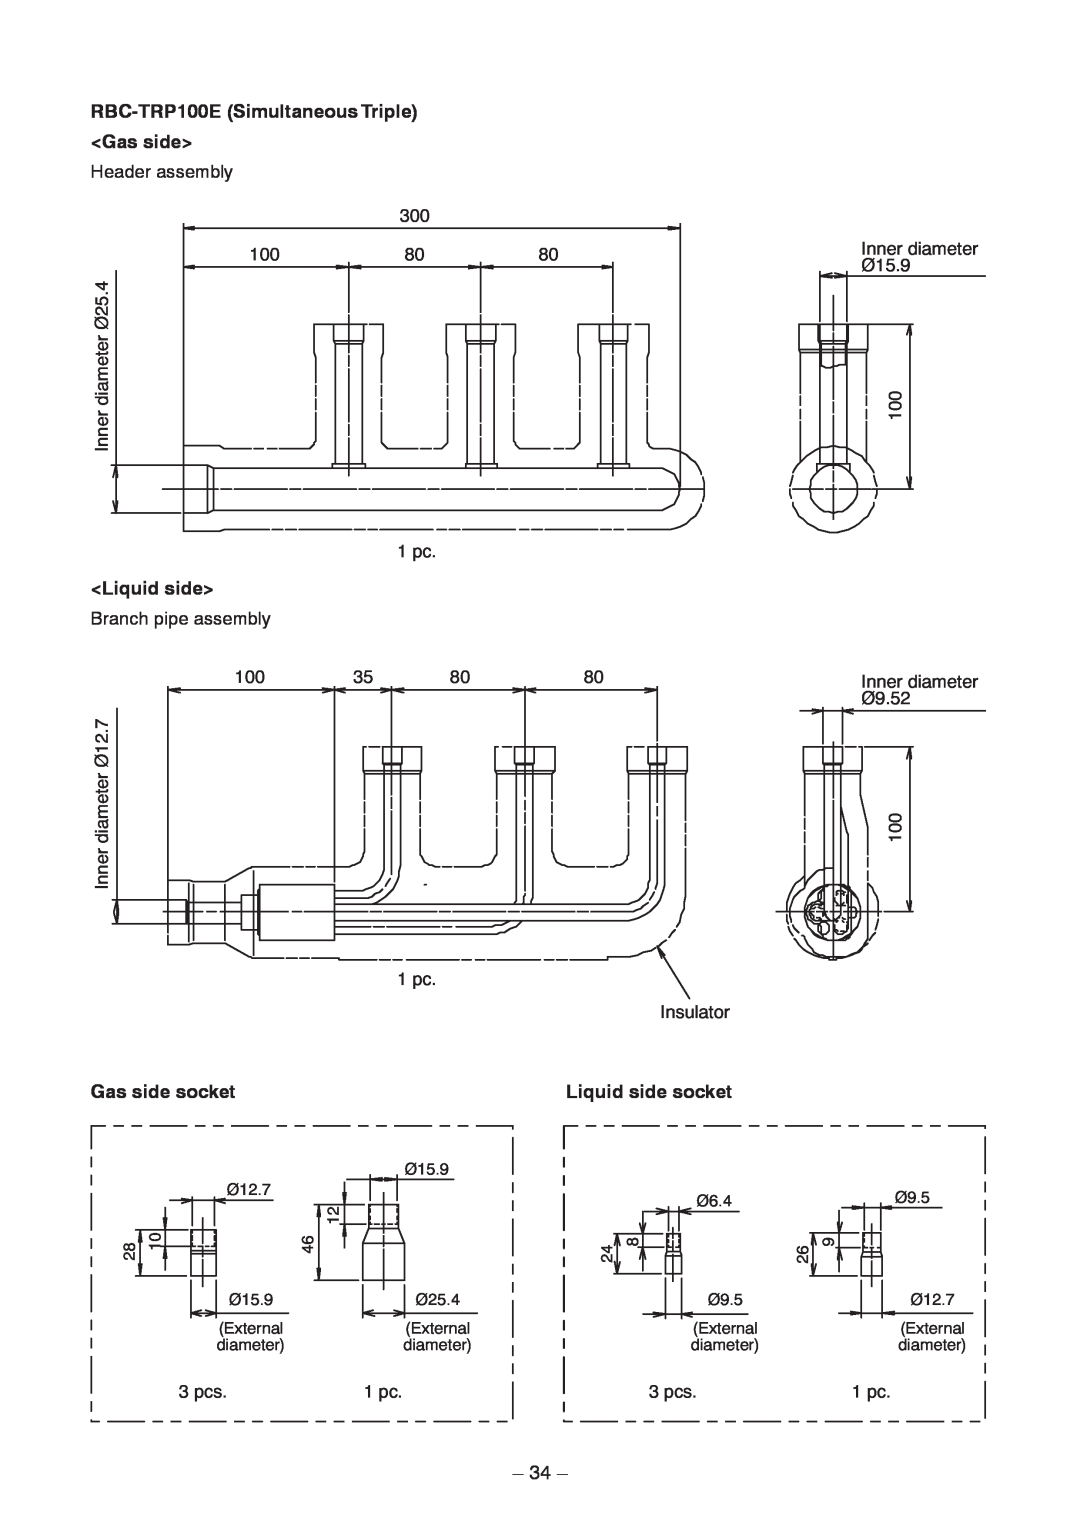 Toshiba RAV-SP1404AT8-TR 34, RBC-TRP100ESimultaneous Triple Gas side, <Liquid side>, Gas side socket, Liquid side socket 